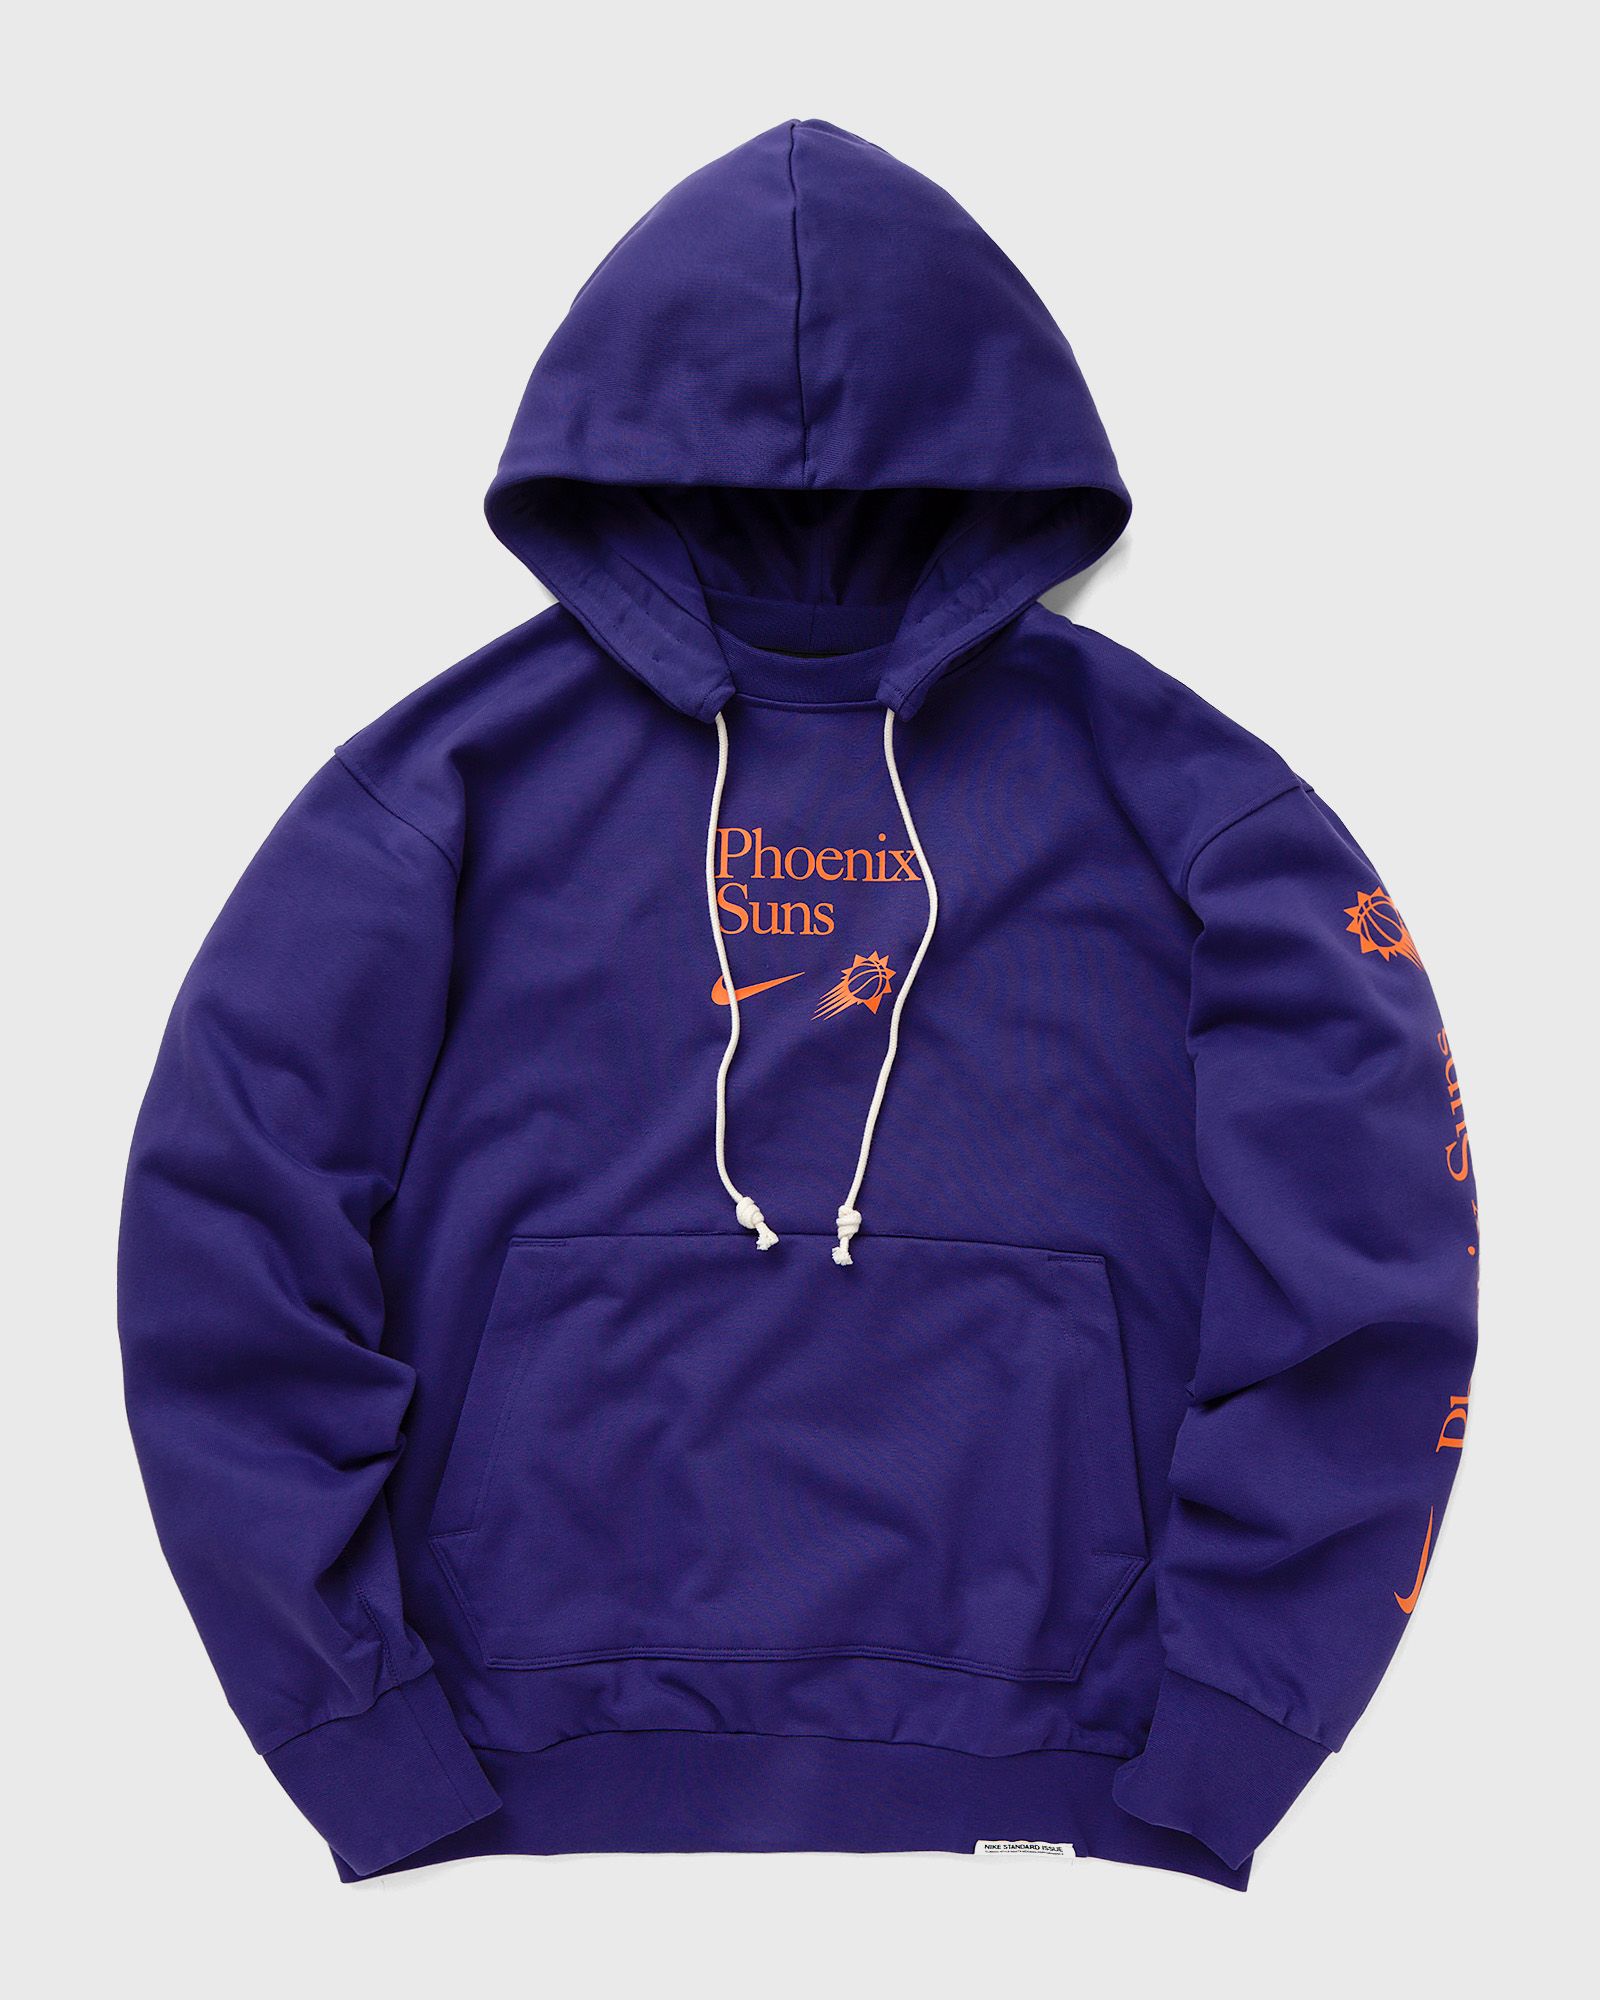 Nike - nba phoenix suns standard issue hoodie men hoodies|team sweats purple in größe:xxl